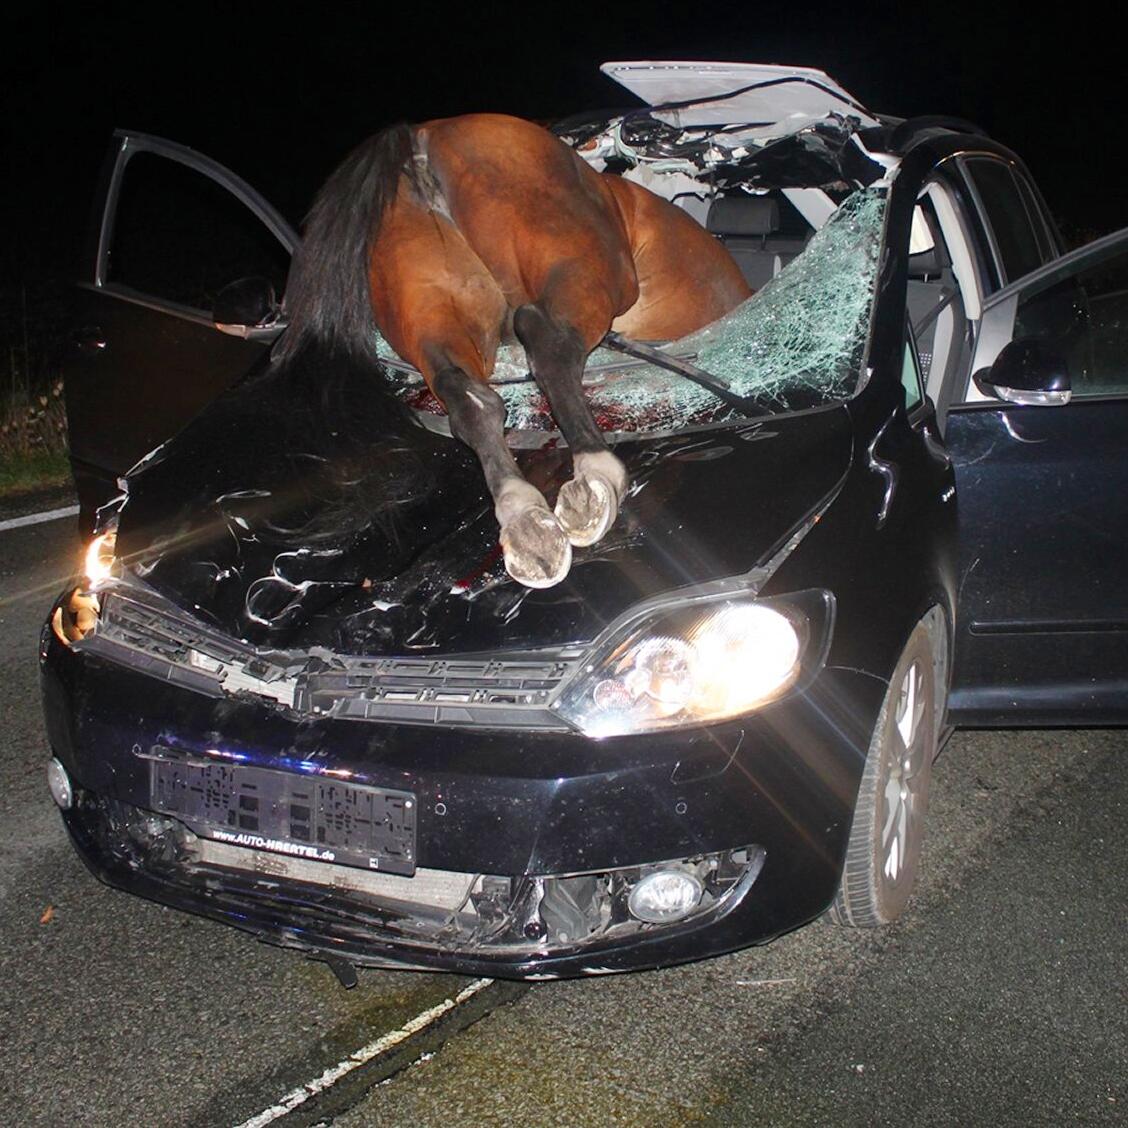 Pferd kracht dPferd kracht durch Windschutzscheibe - Tier tot, Fahrerin im  Glückurch Windschutzscheibe